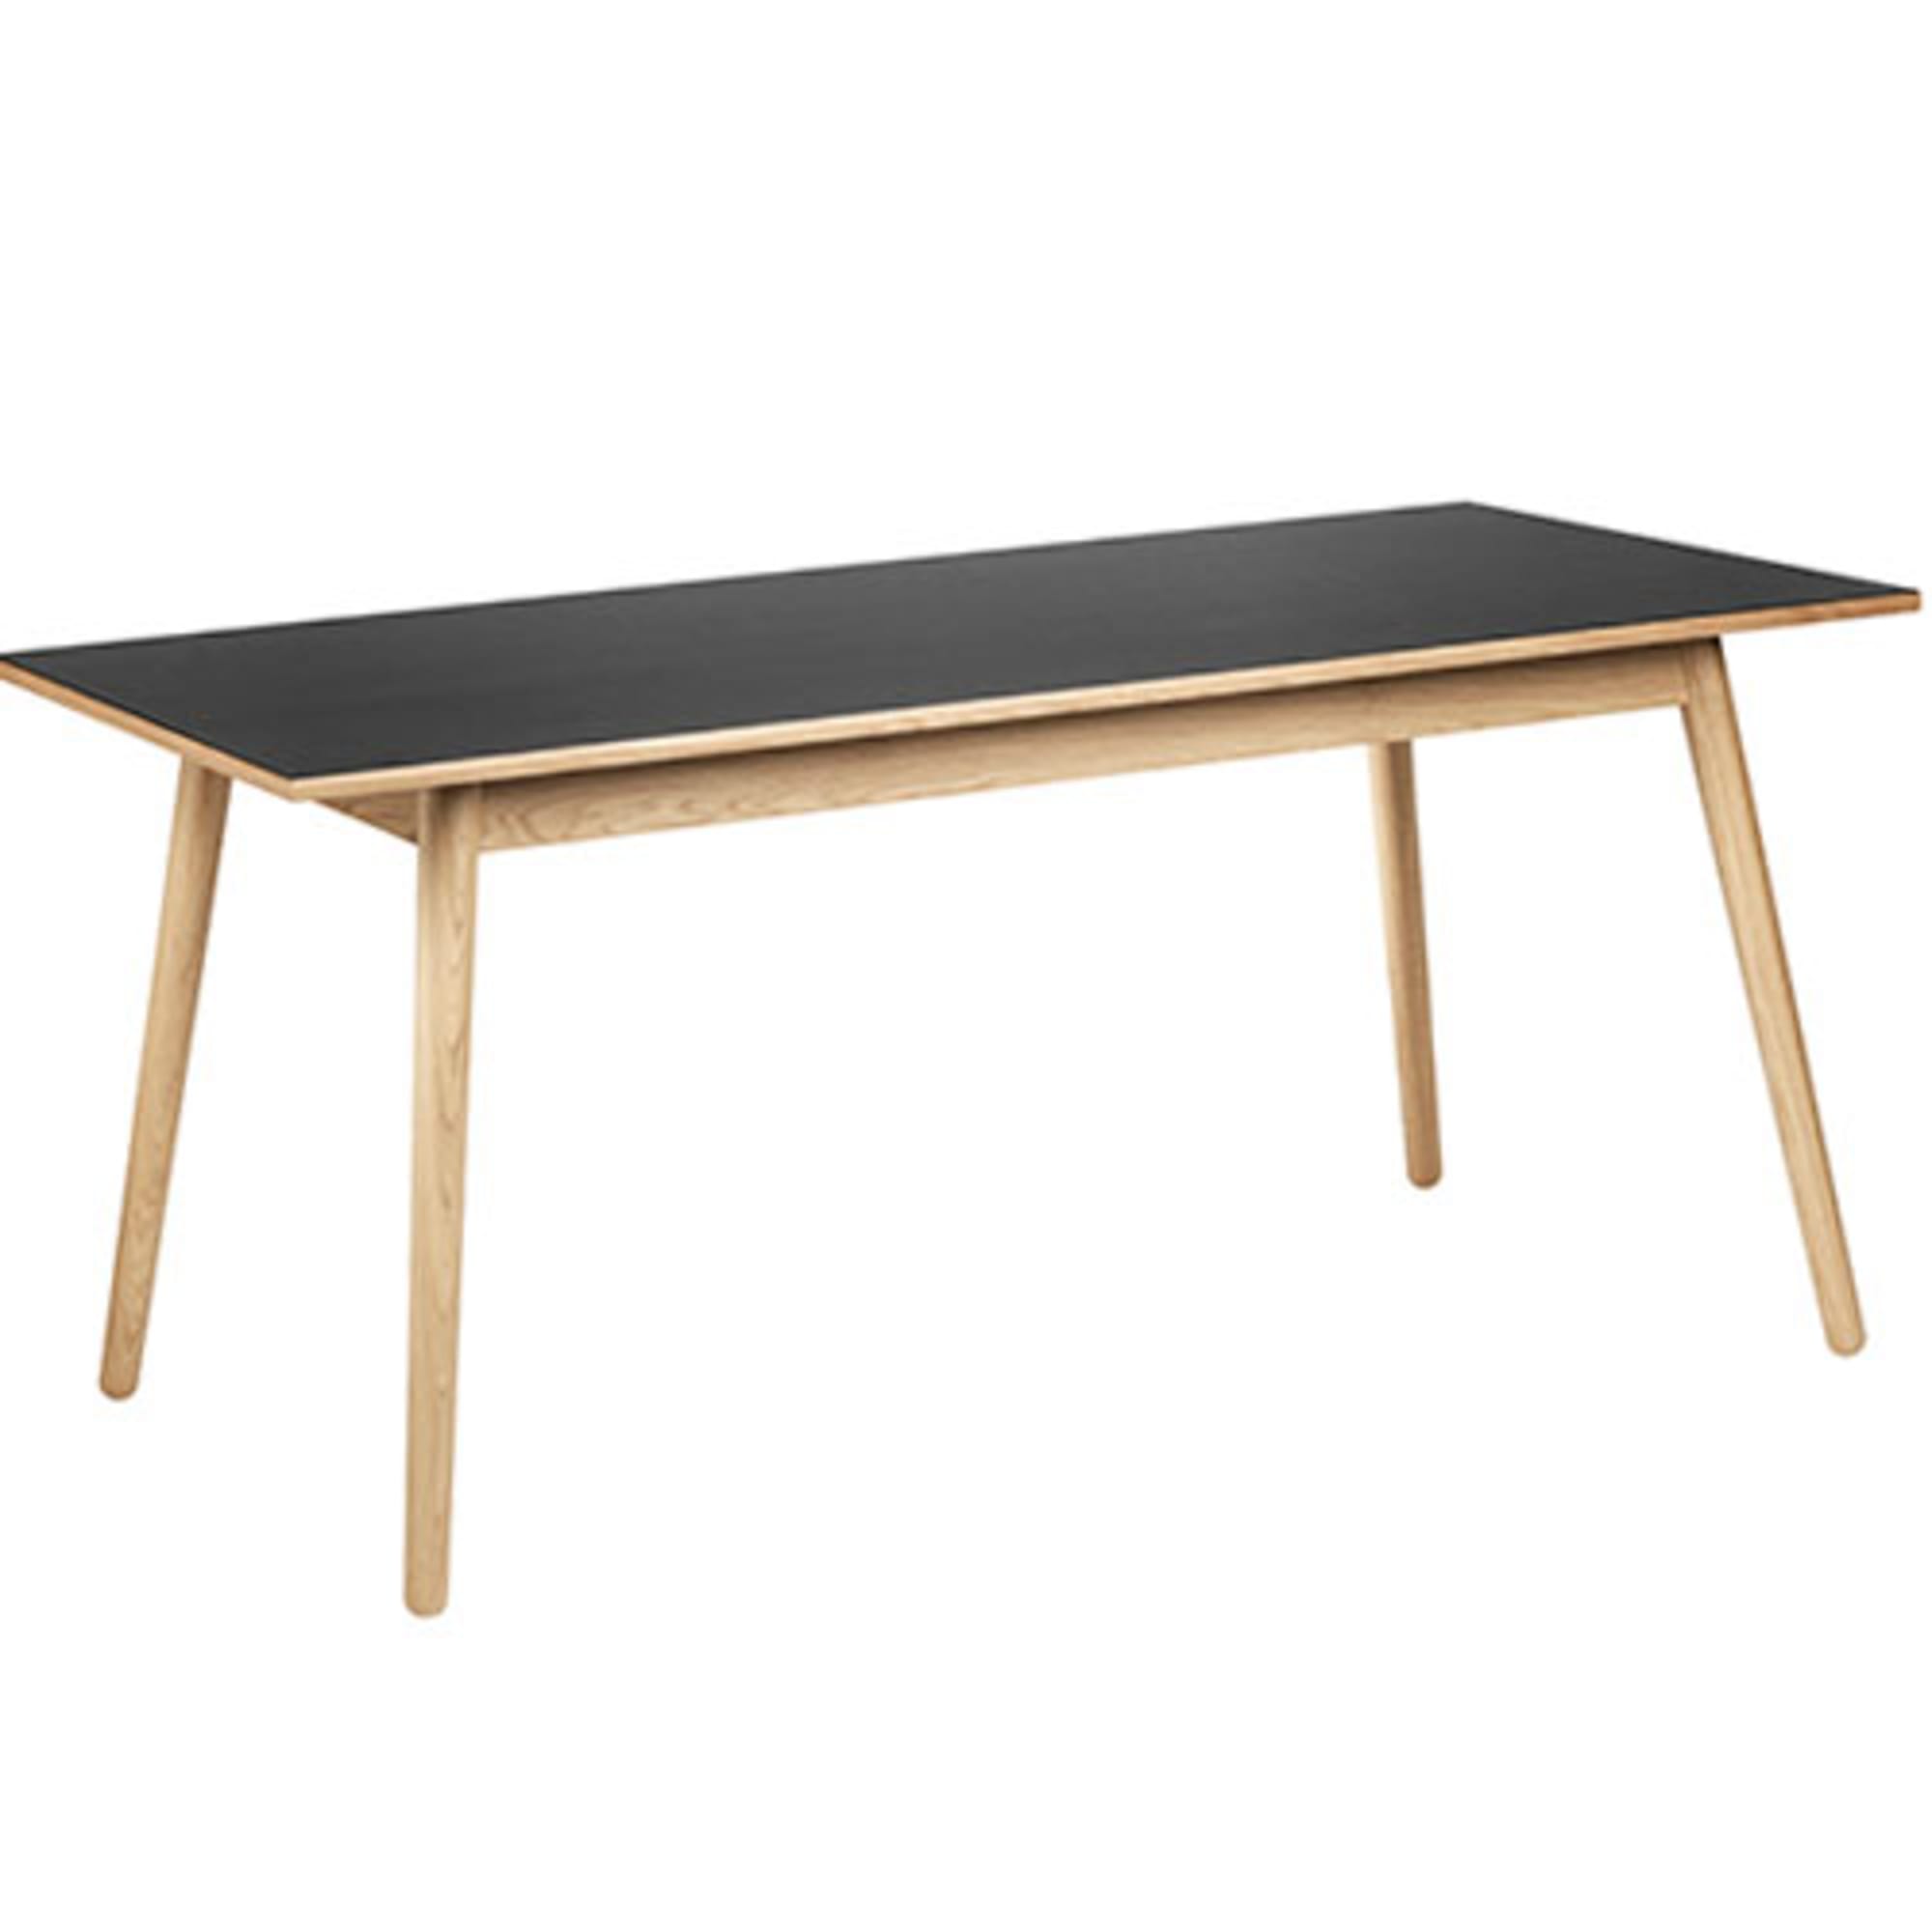 Fdb Møbler C35 C Dining Table For 8 Persons Oak, Black Linoleum Top, 95x220cm